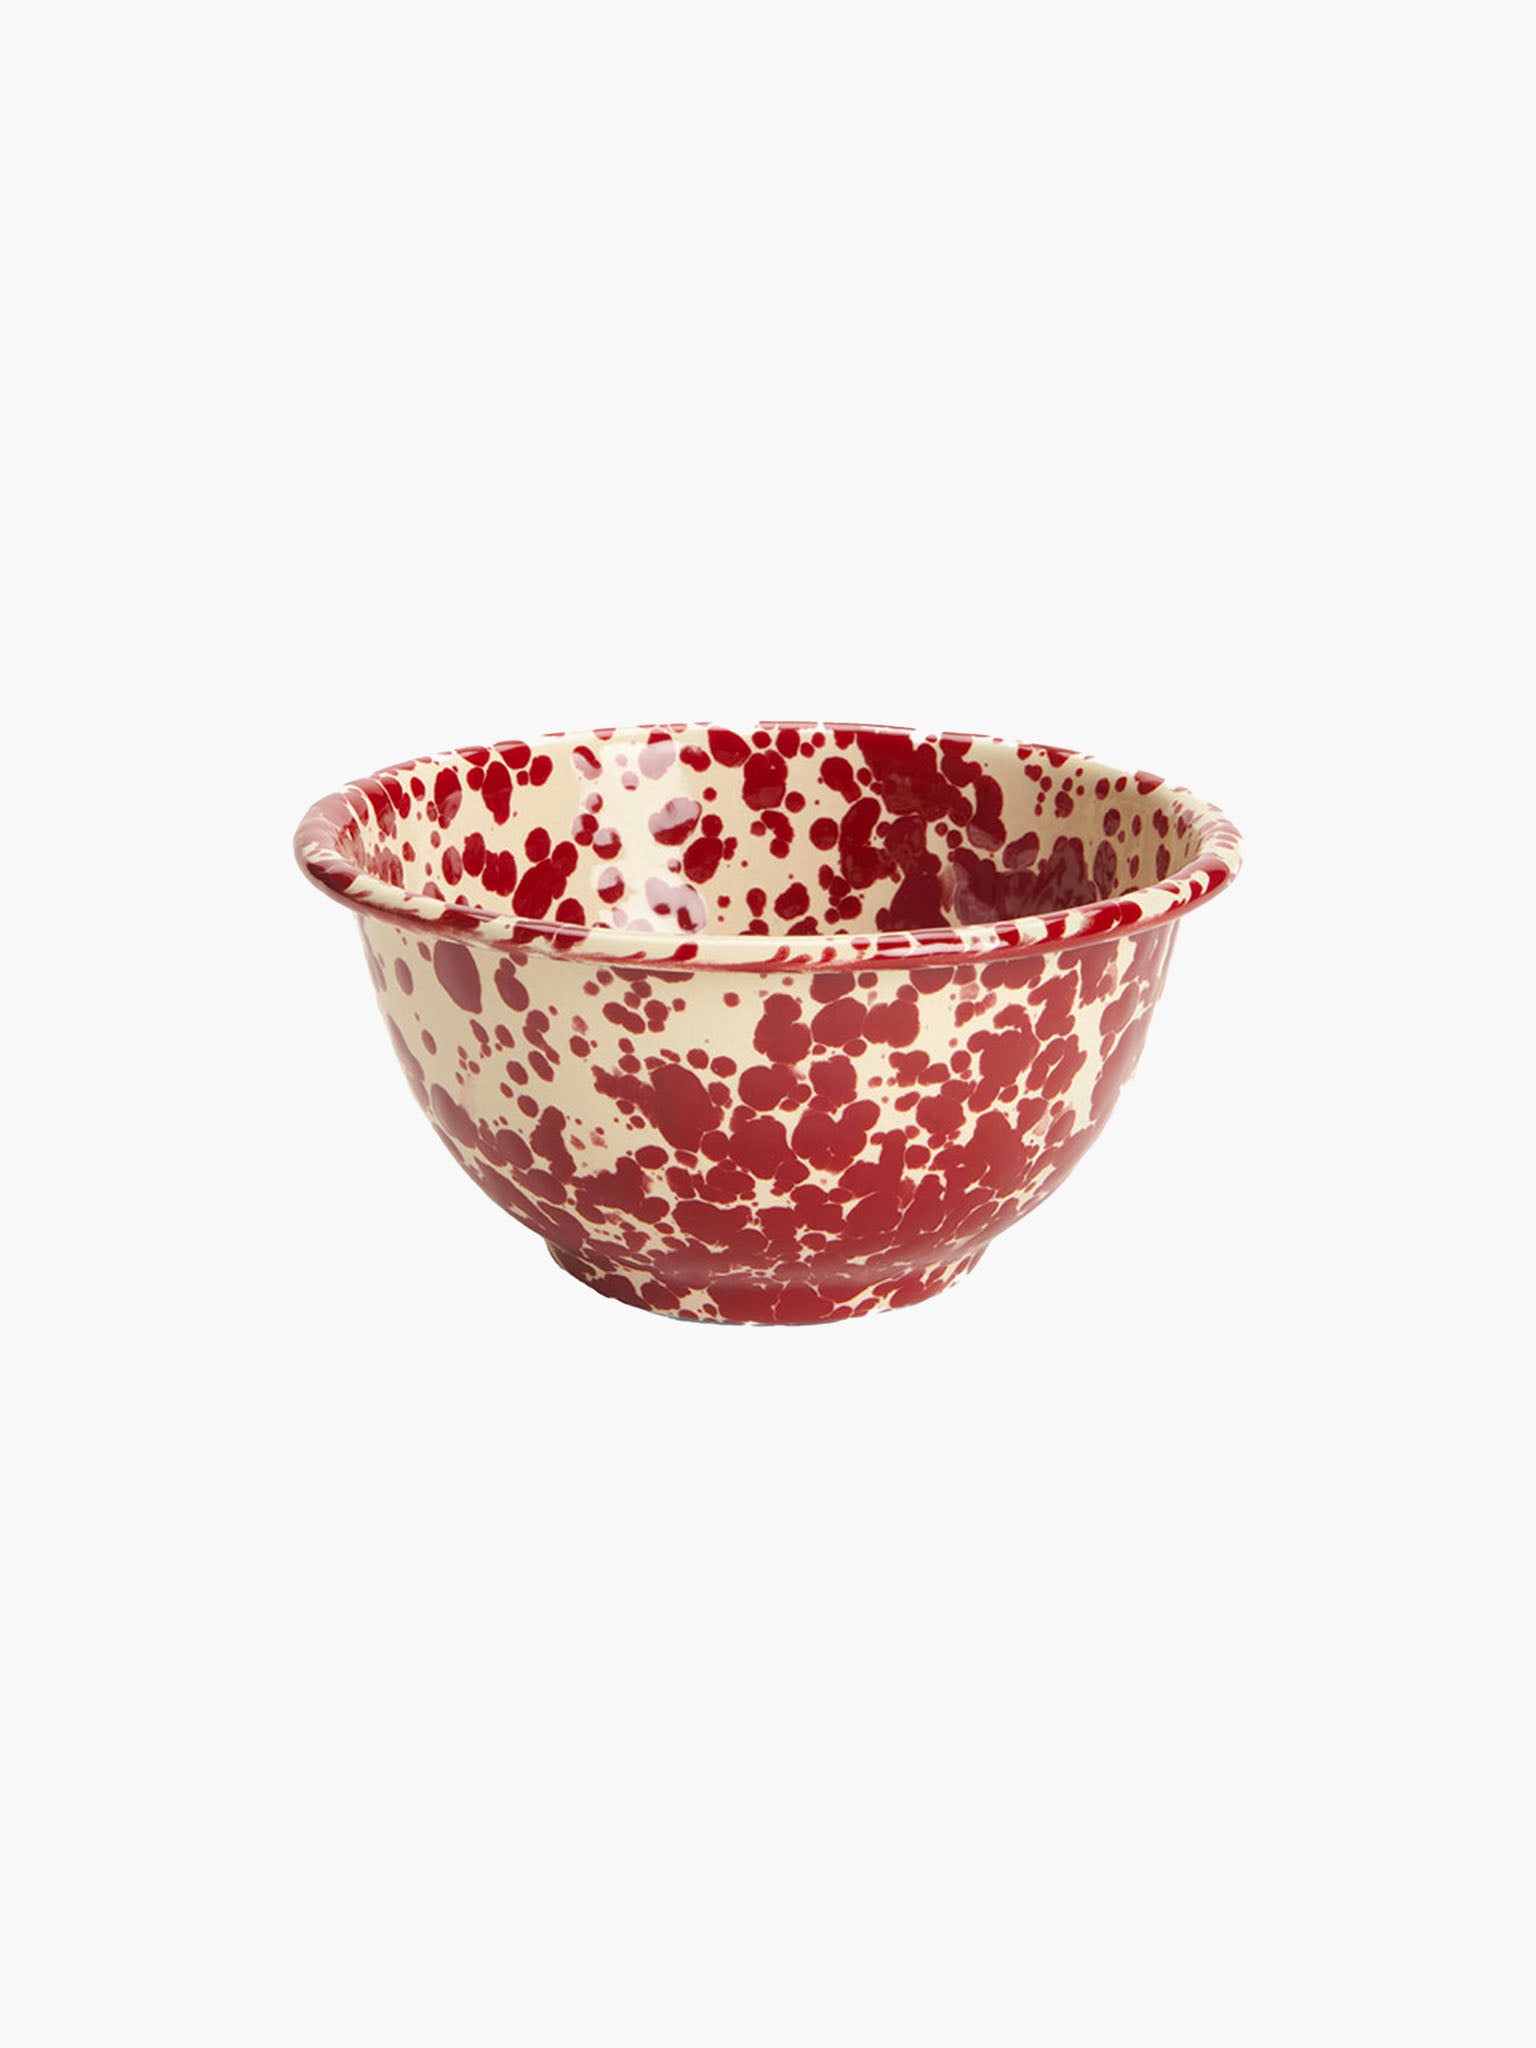 Splatter Small Footed Bowl (13cm) - Burgundy & Cream